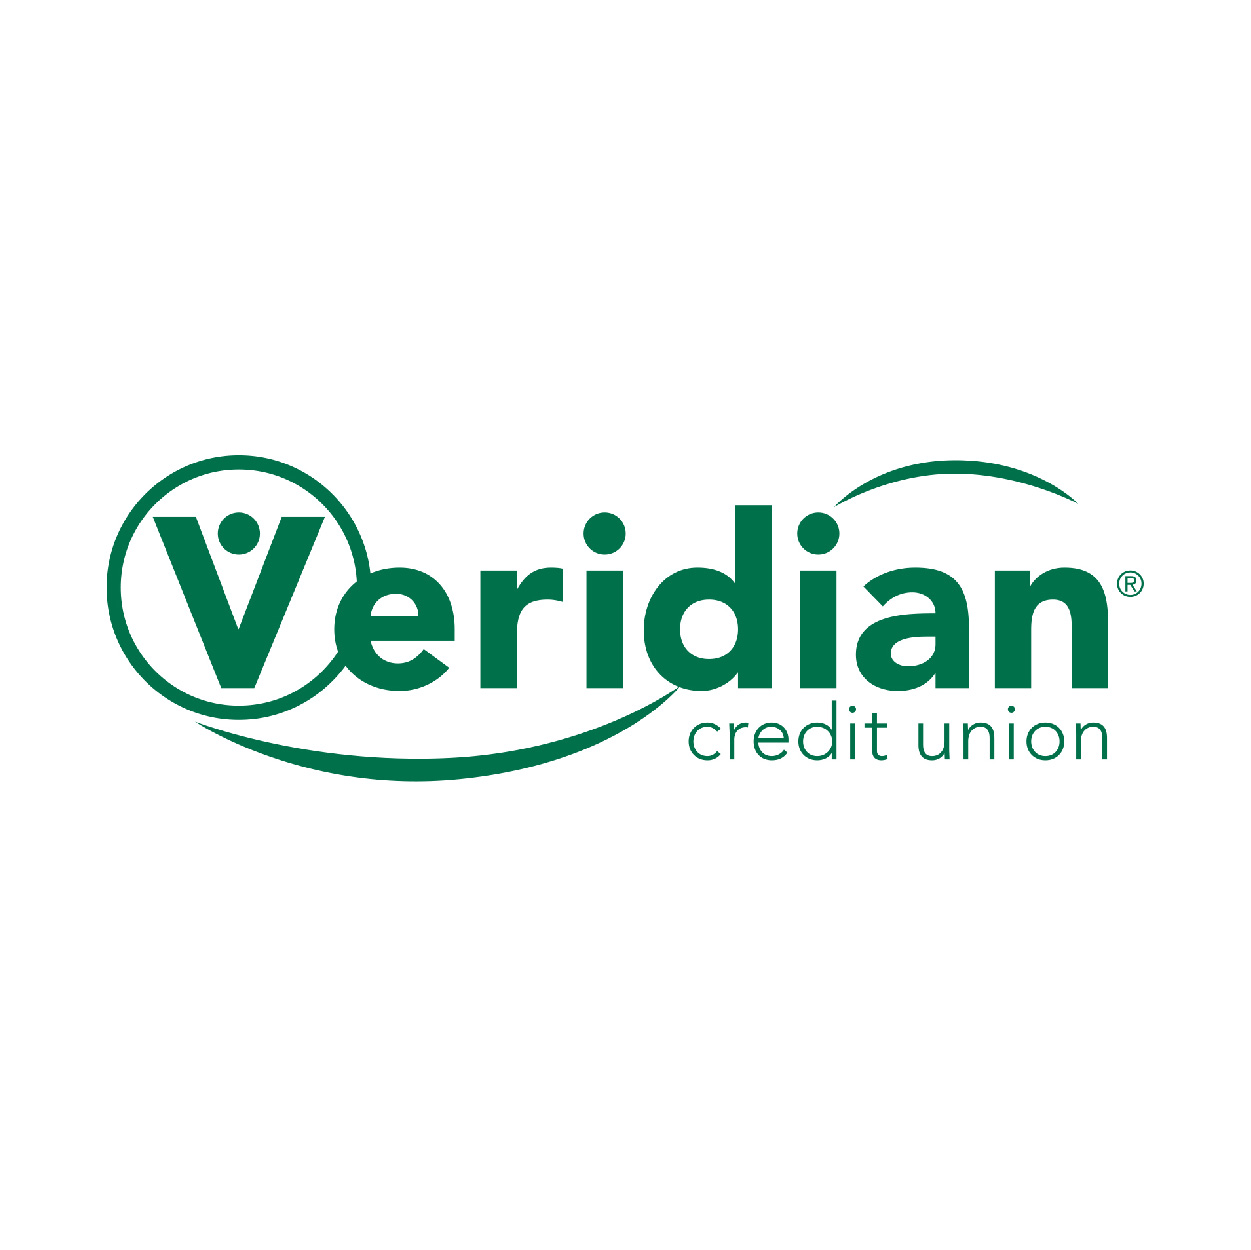 Veridian Credit Union